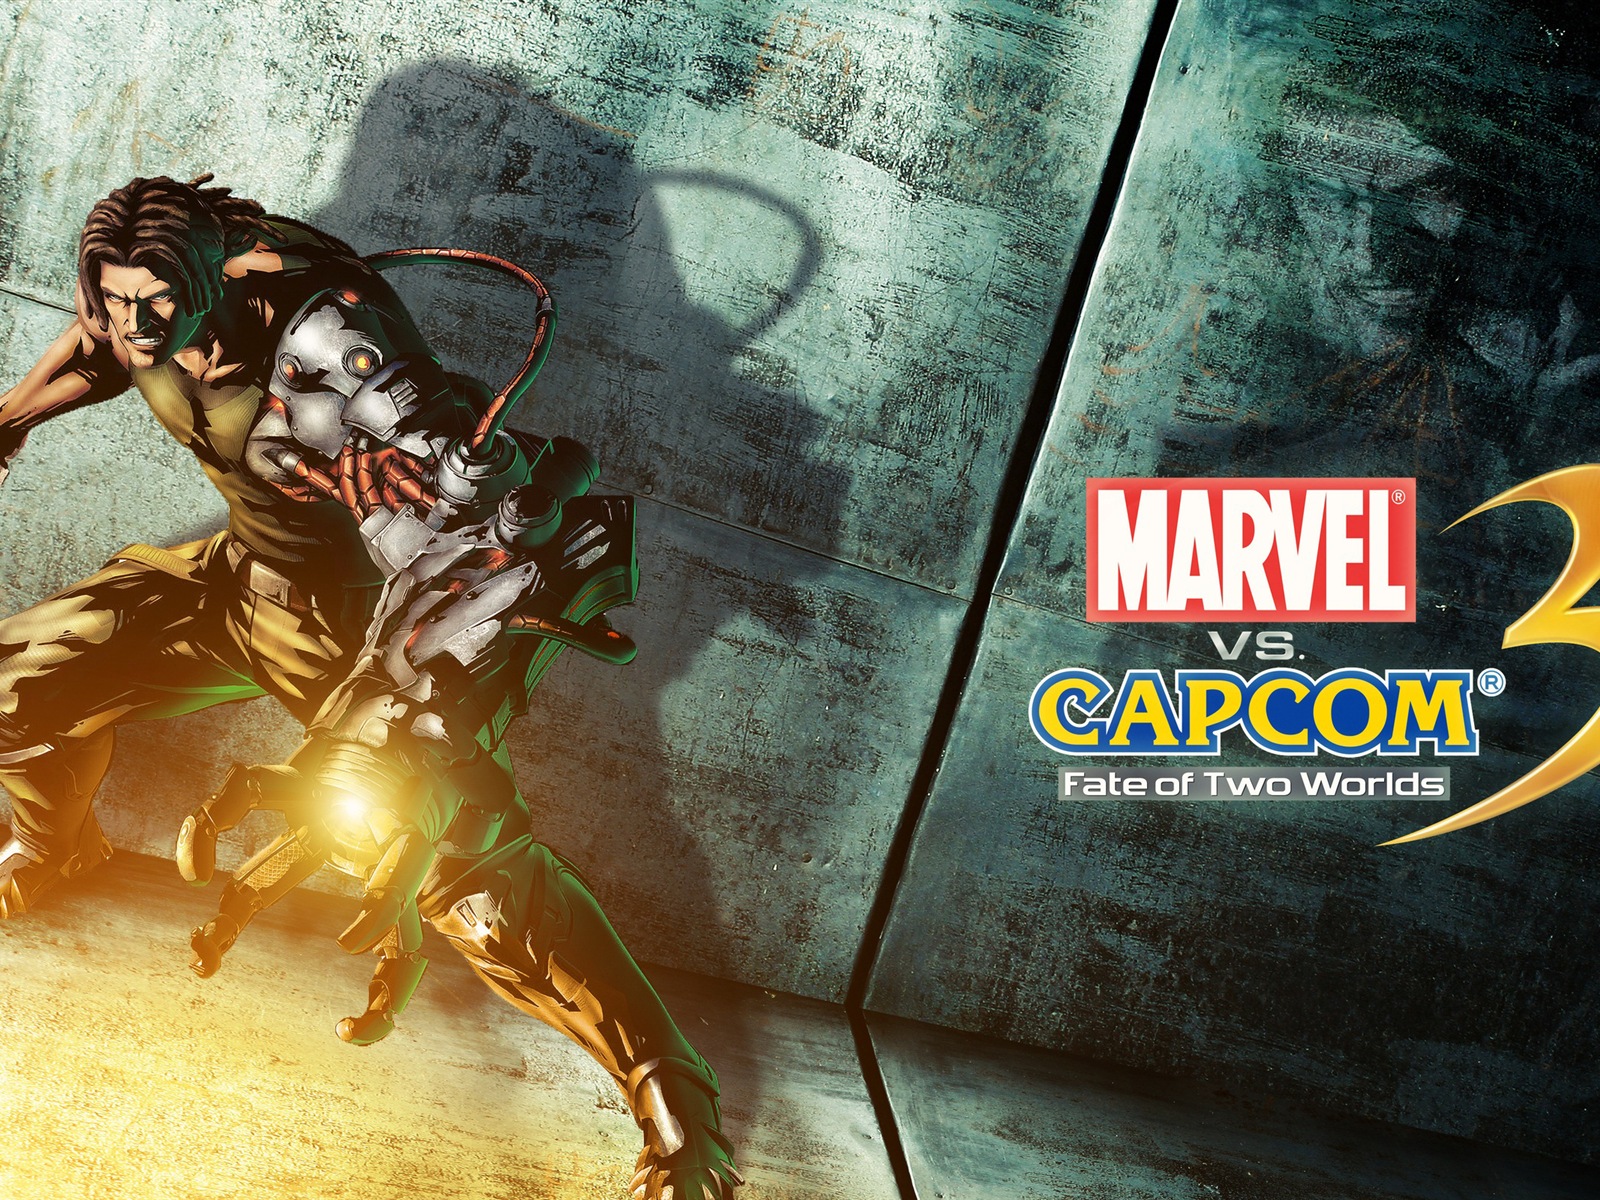 Marvel VS. Capcom 3: Fate of Two Worlds 漫畫英雄VS.卡普空3 高清遊戲壁紙 #8 - 1600x1200